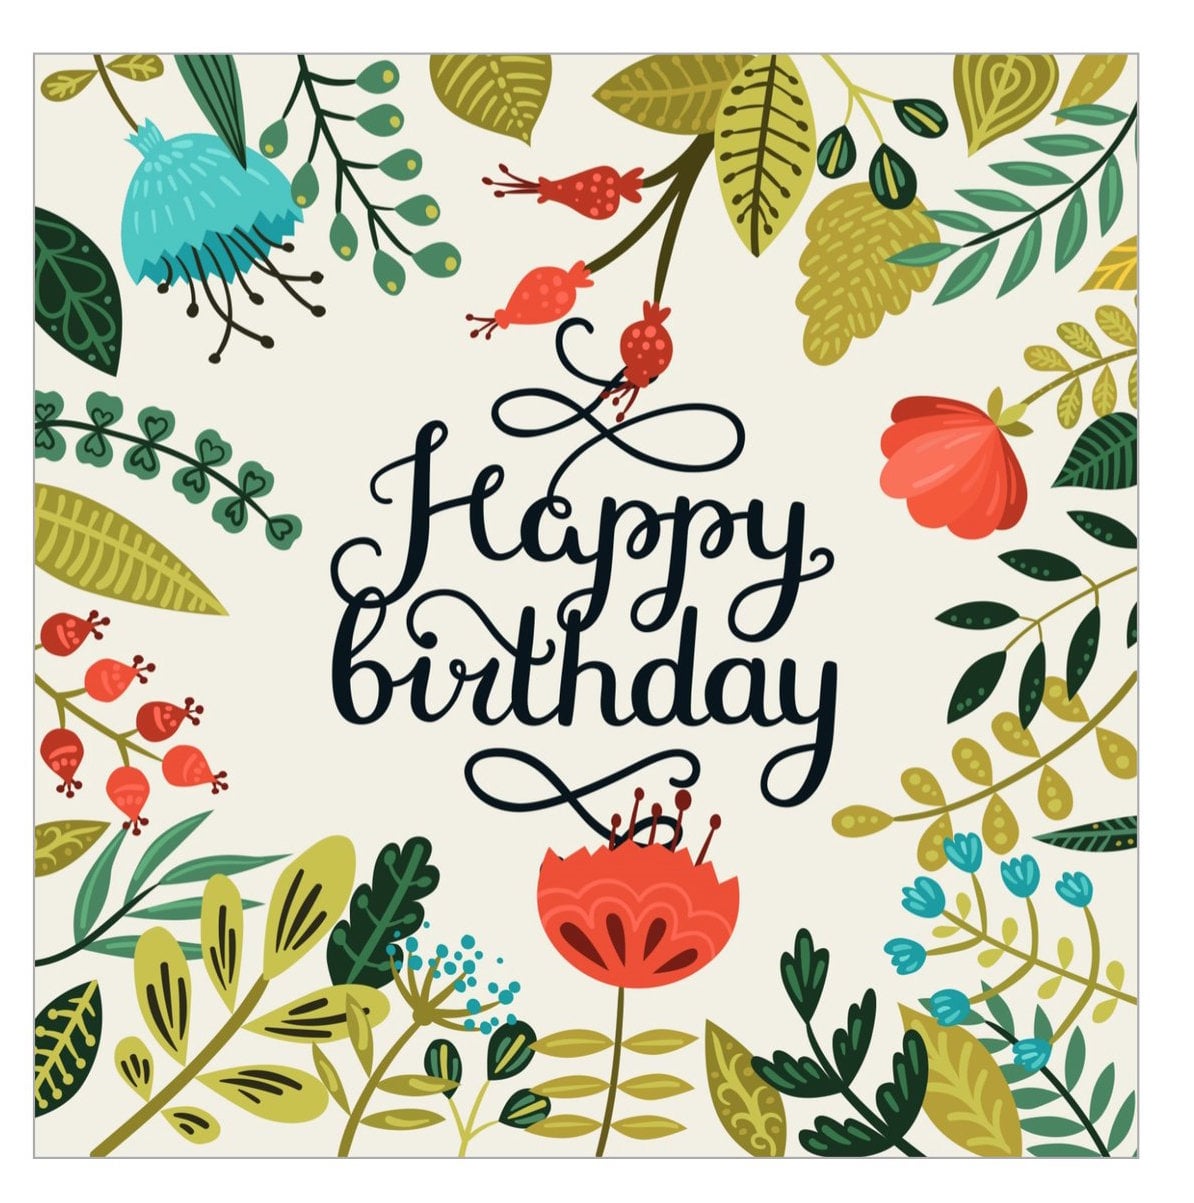 happy birthday printable cards